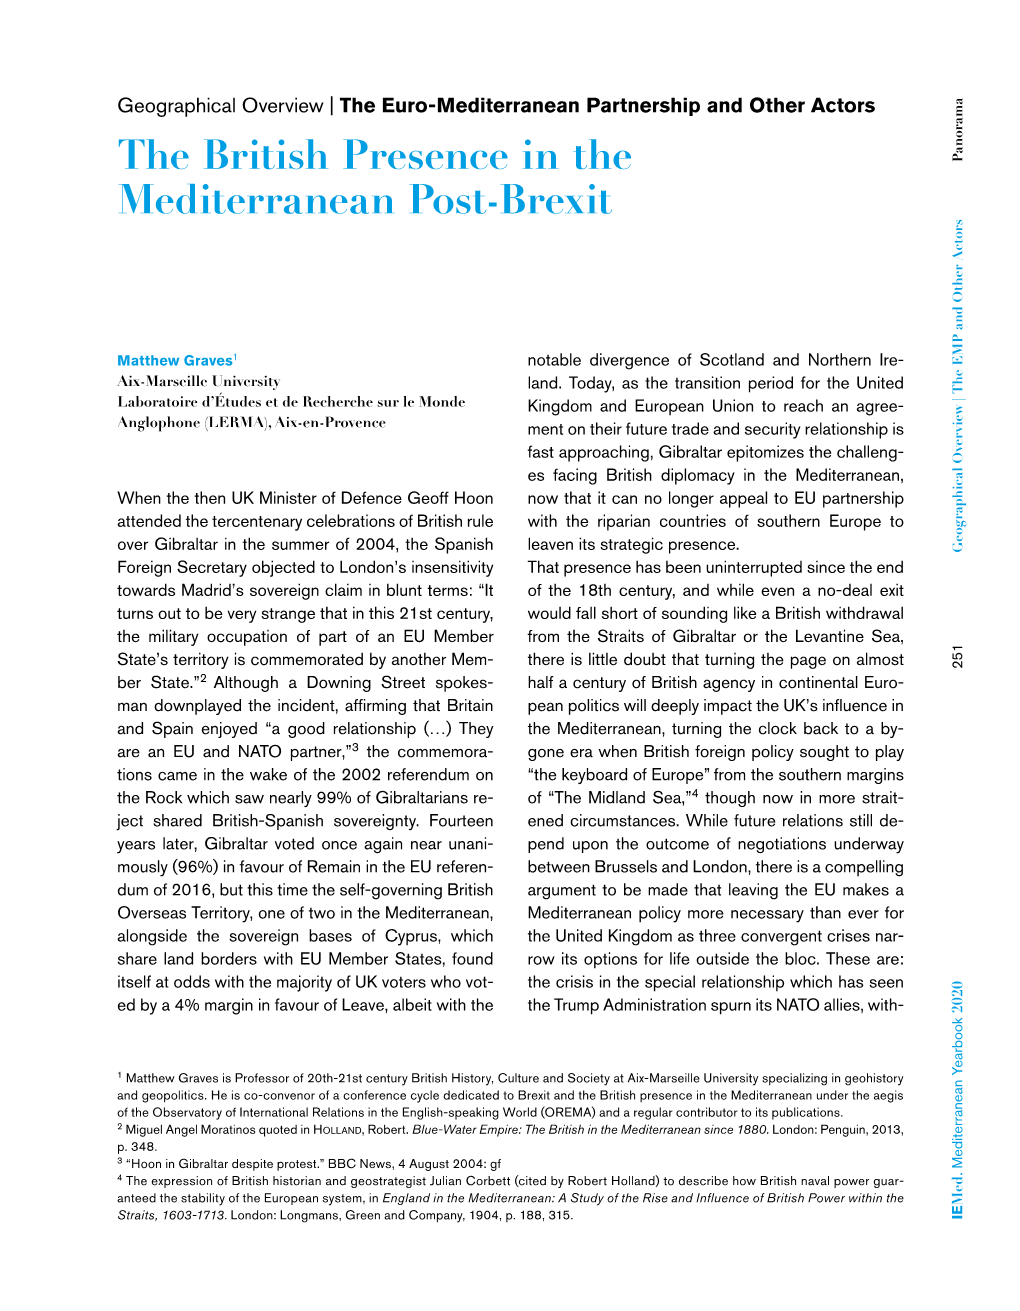 The British Presence in the Mediterranean Post-Brexit